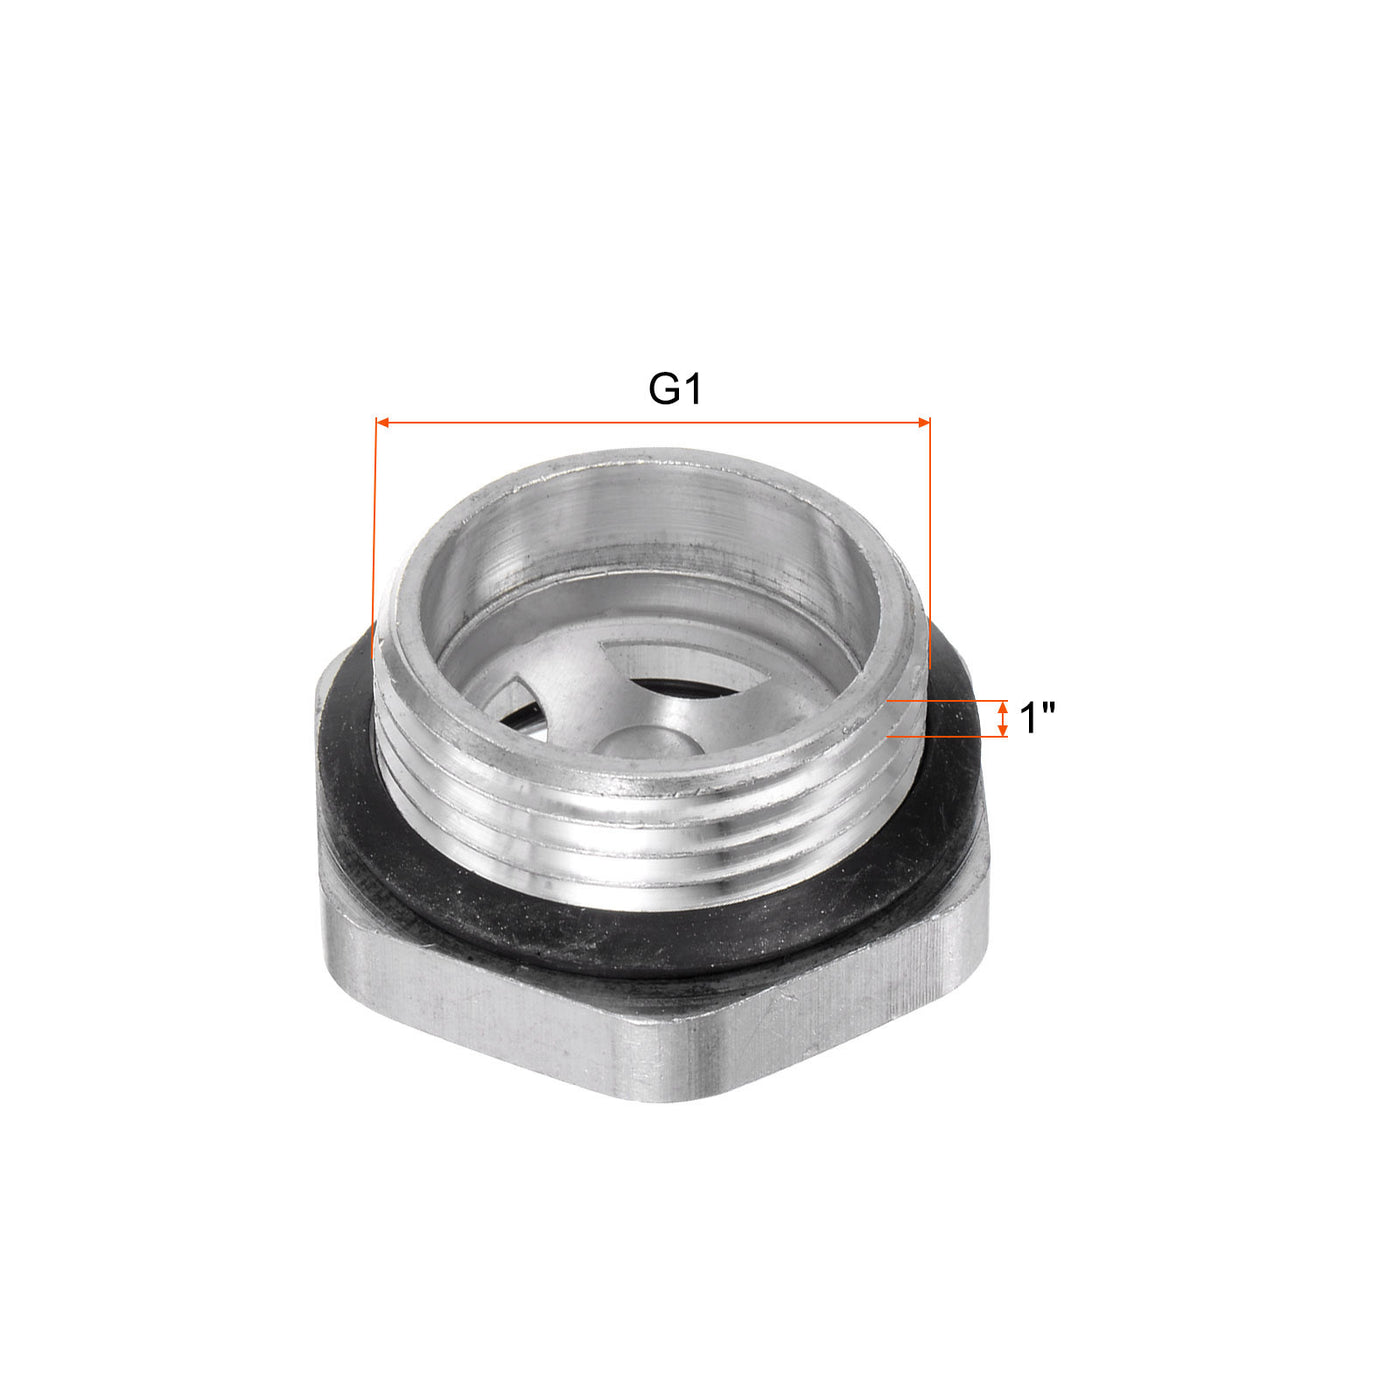 uxcell Uxcell Air Compressor Oil Level Gauge Sight Glass G1 Male Thread Aluminum 5Pcs